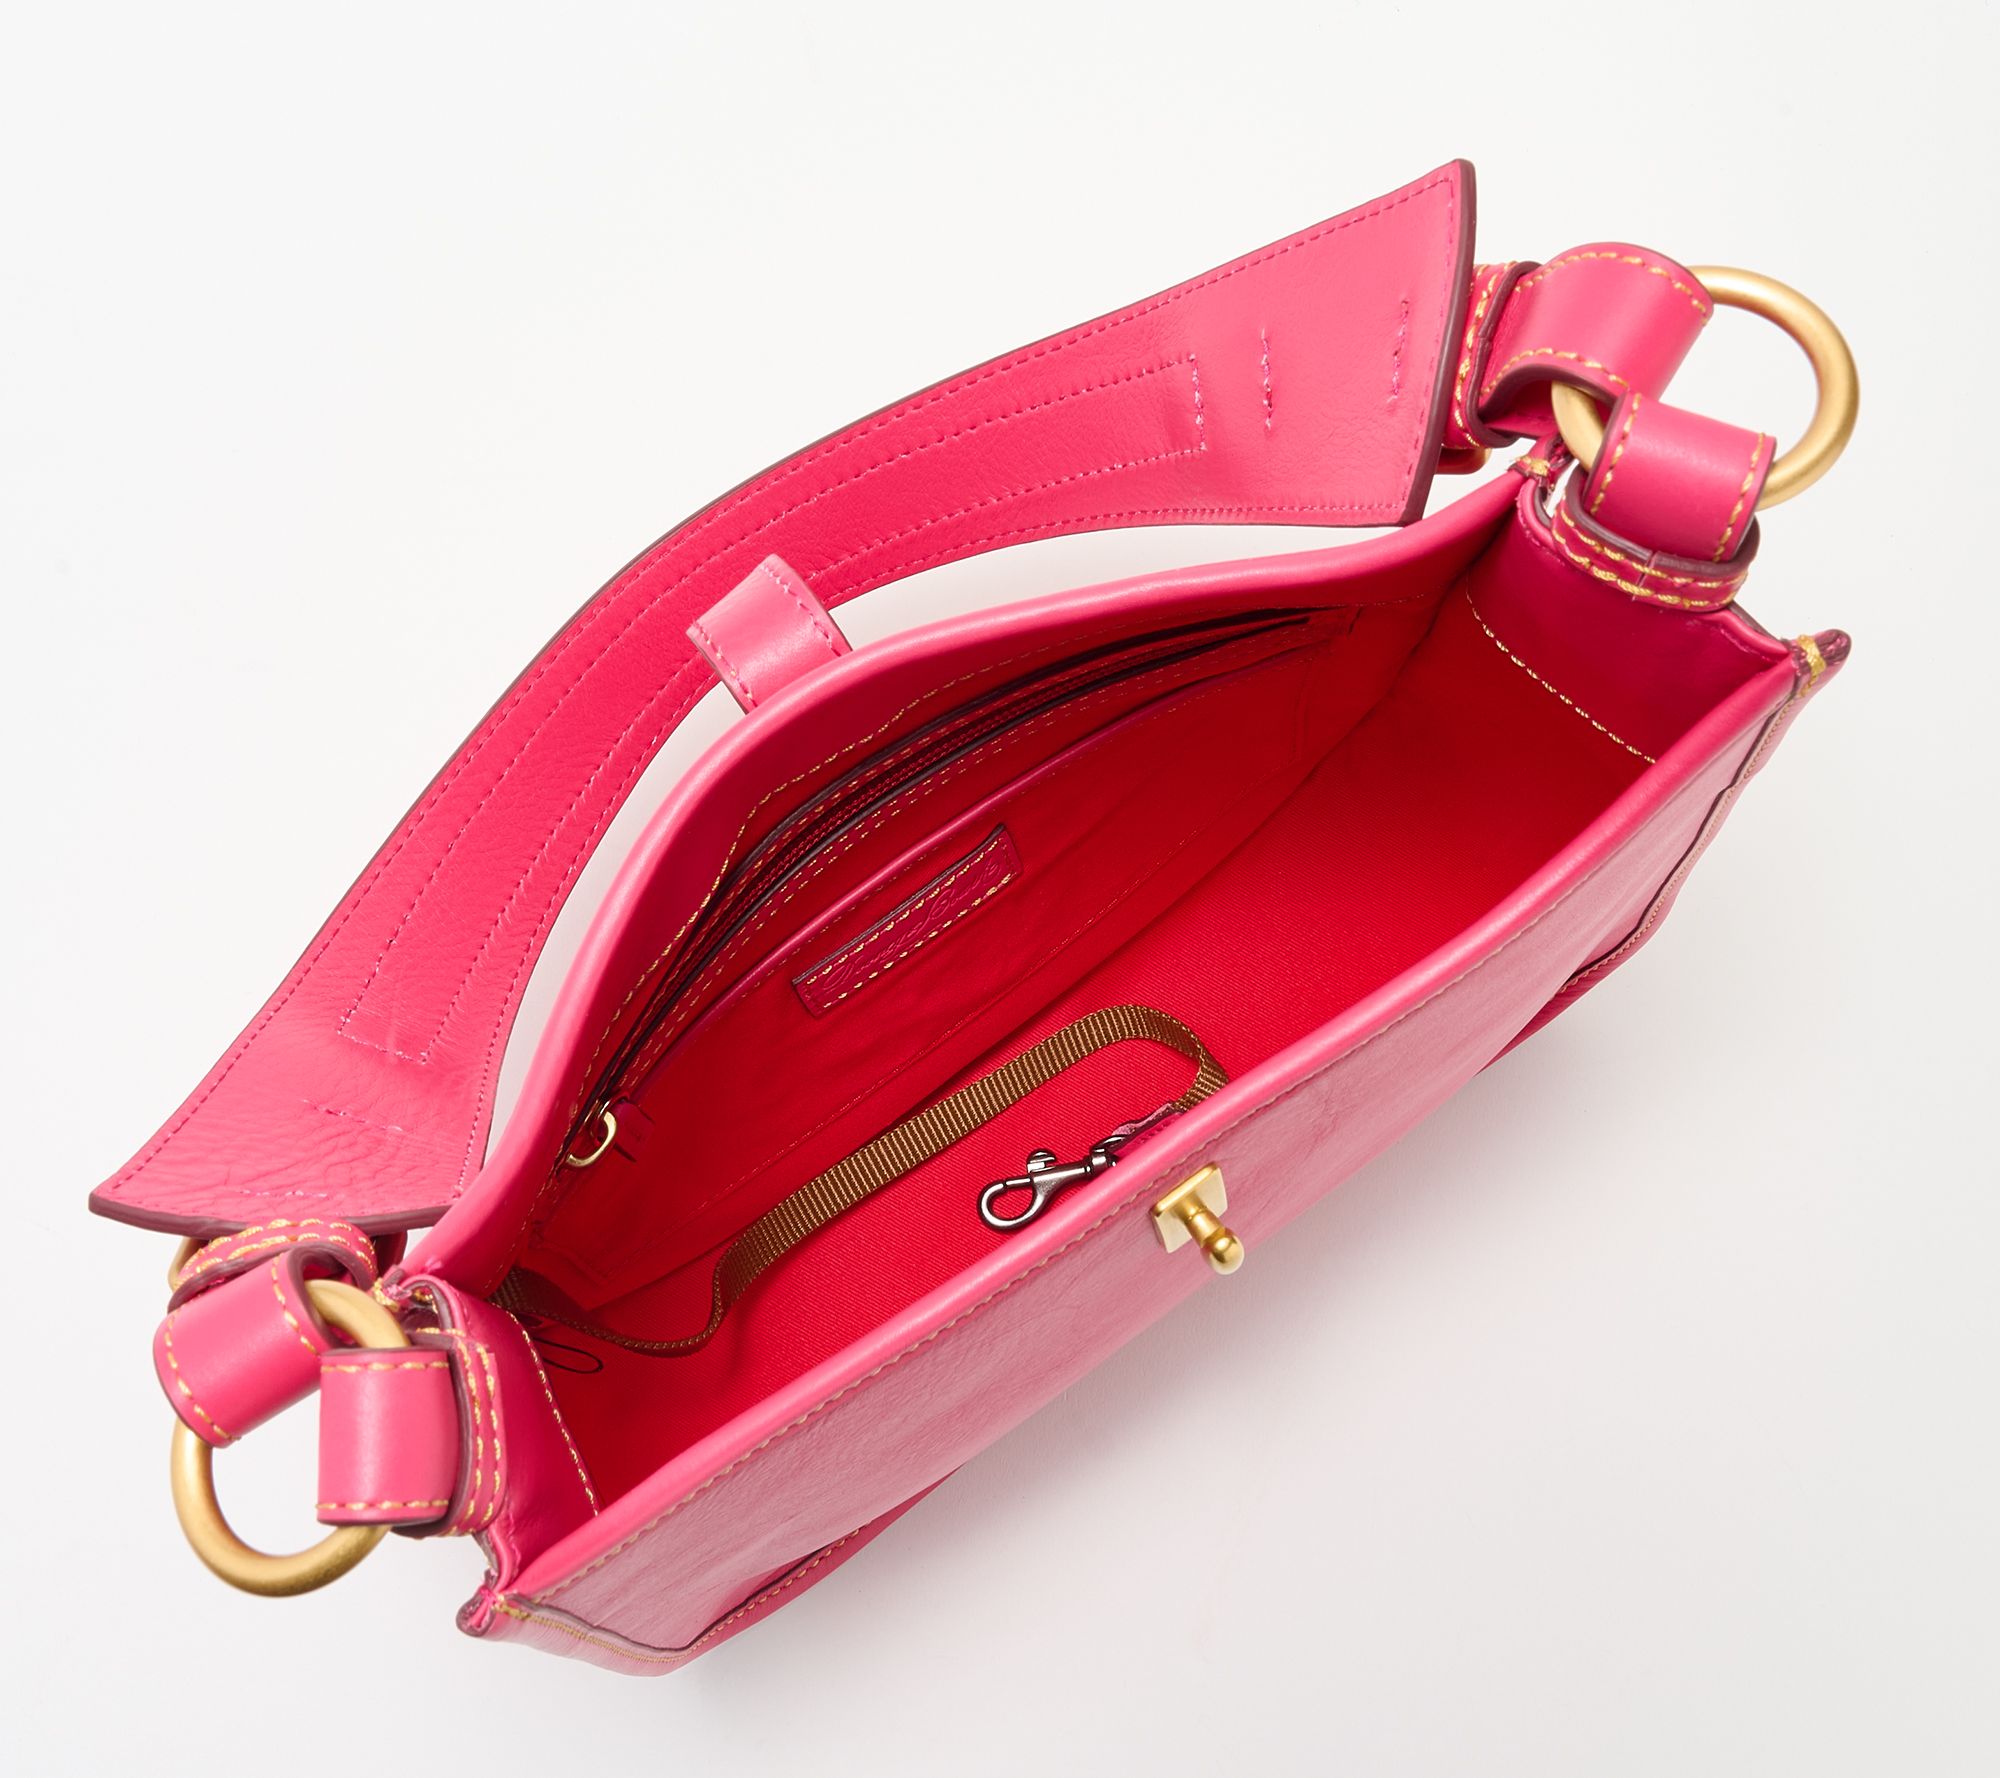 Bag Organizer for Chanel Classic Flap Jumbo - Premium Felt (Handmade/20  Colors) : Handmade Products 